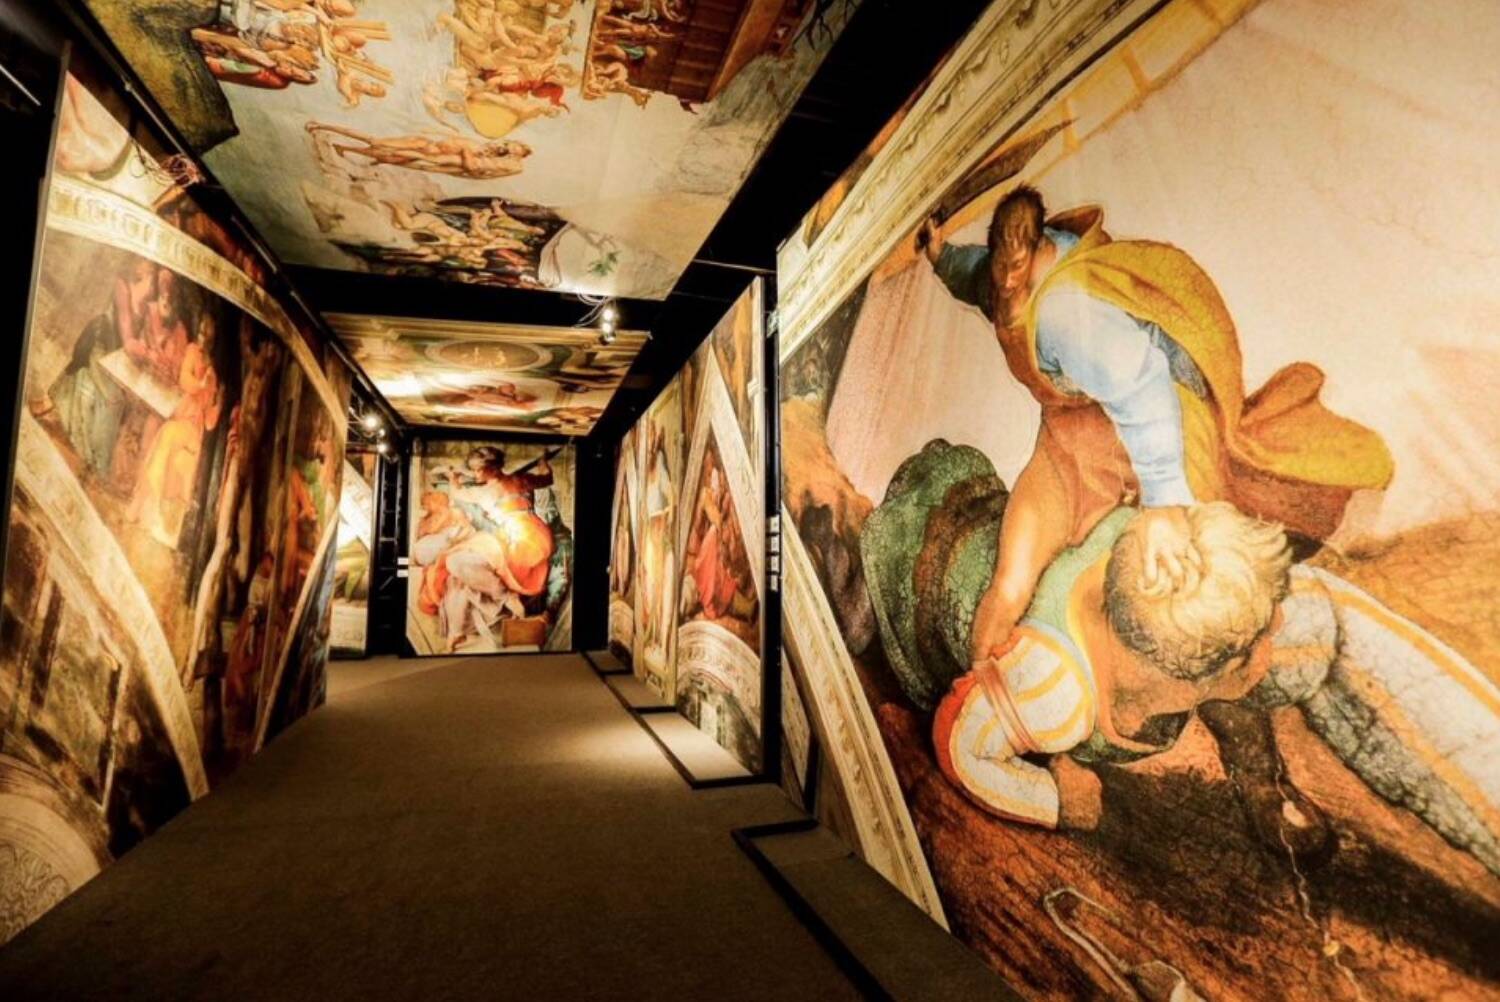 Previous exhibition of Sistene Chapel frescoes (Screenshot from sistenechapel.com)